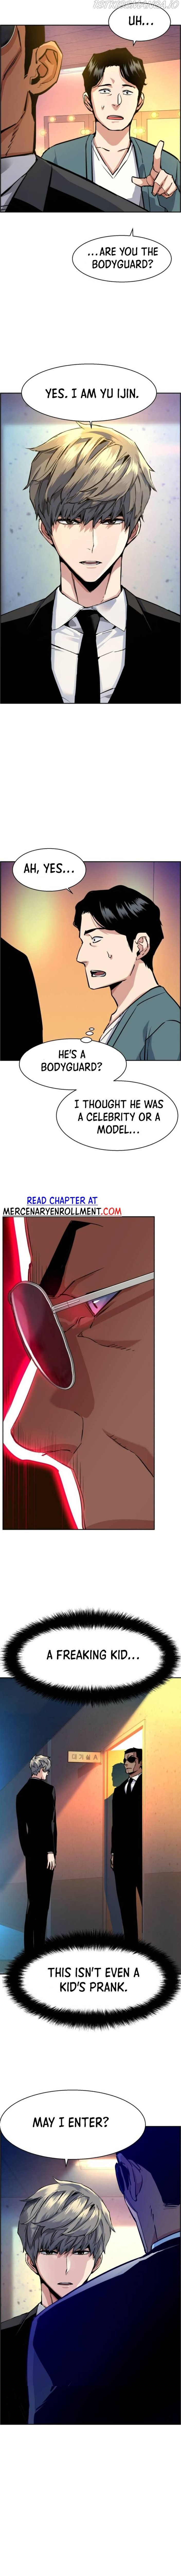 Mercenary Enrollment Chapter 58 page 8 - Mangakakalot